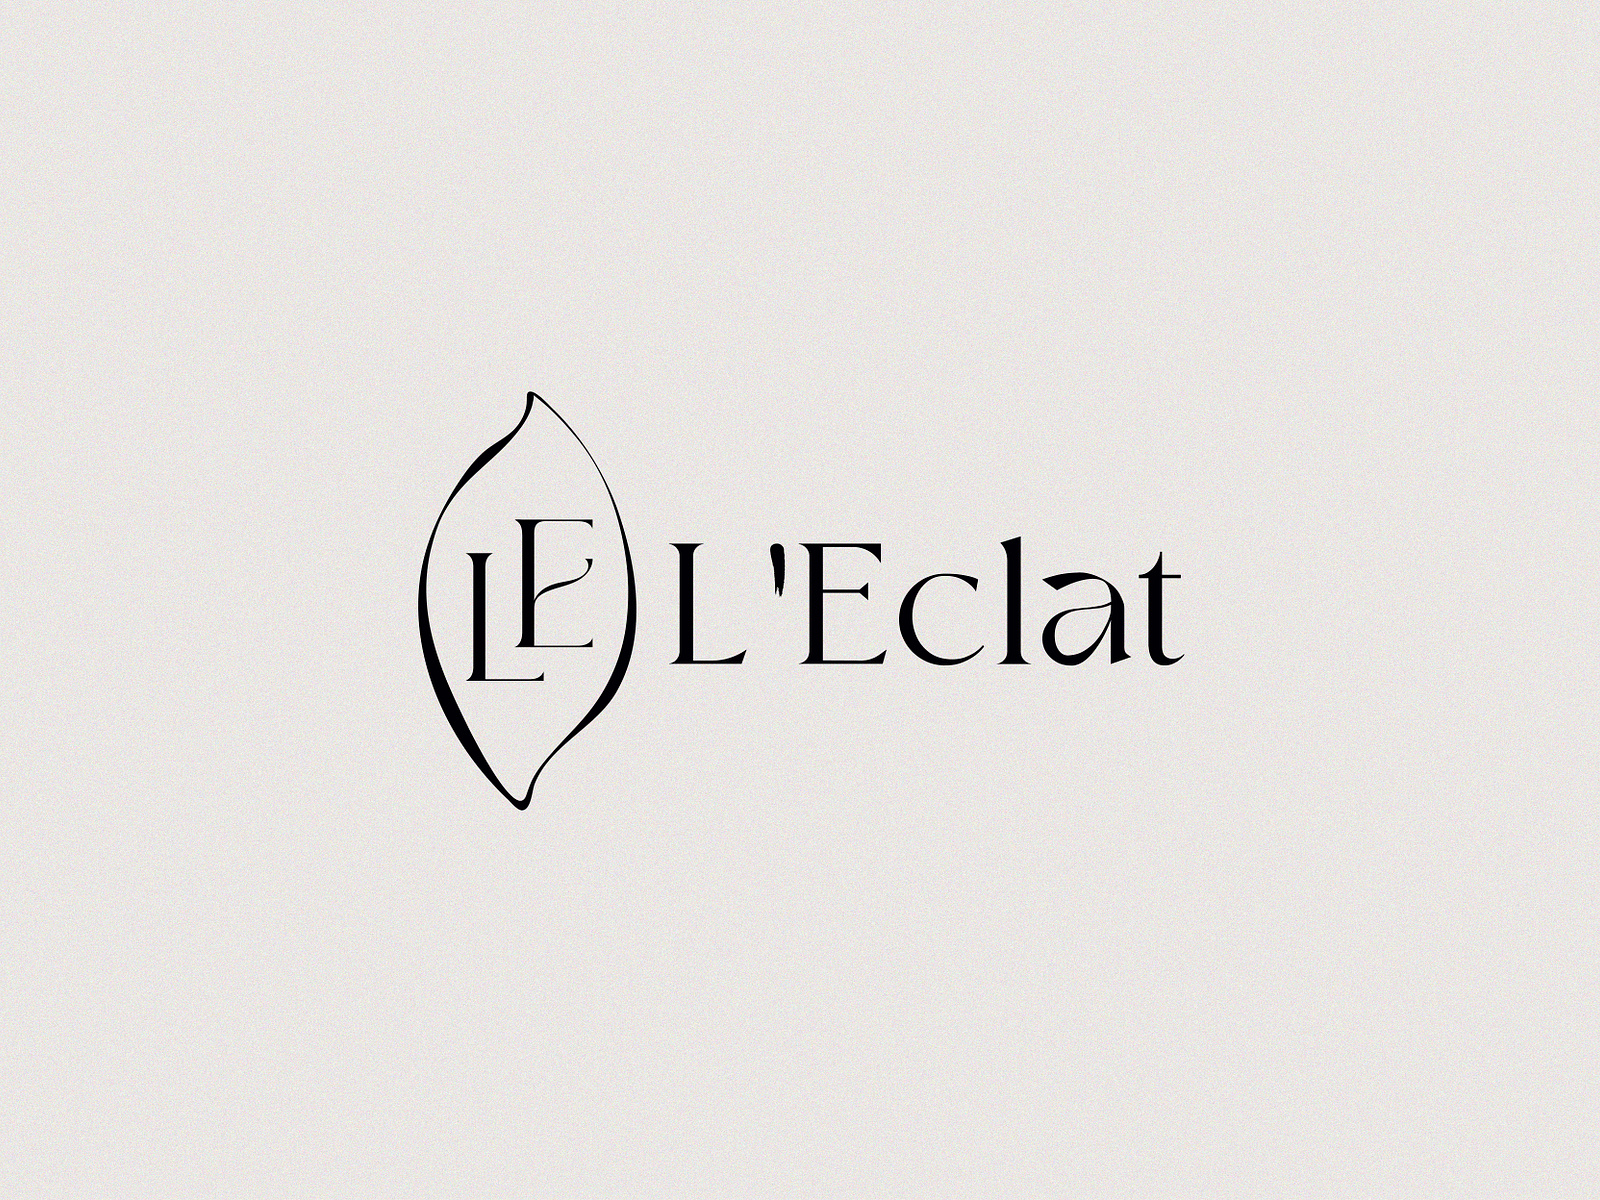 L'eclat rebrand  luxury, elegant logo by ZMZ Designz ™️ on Dribbble